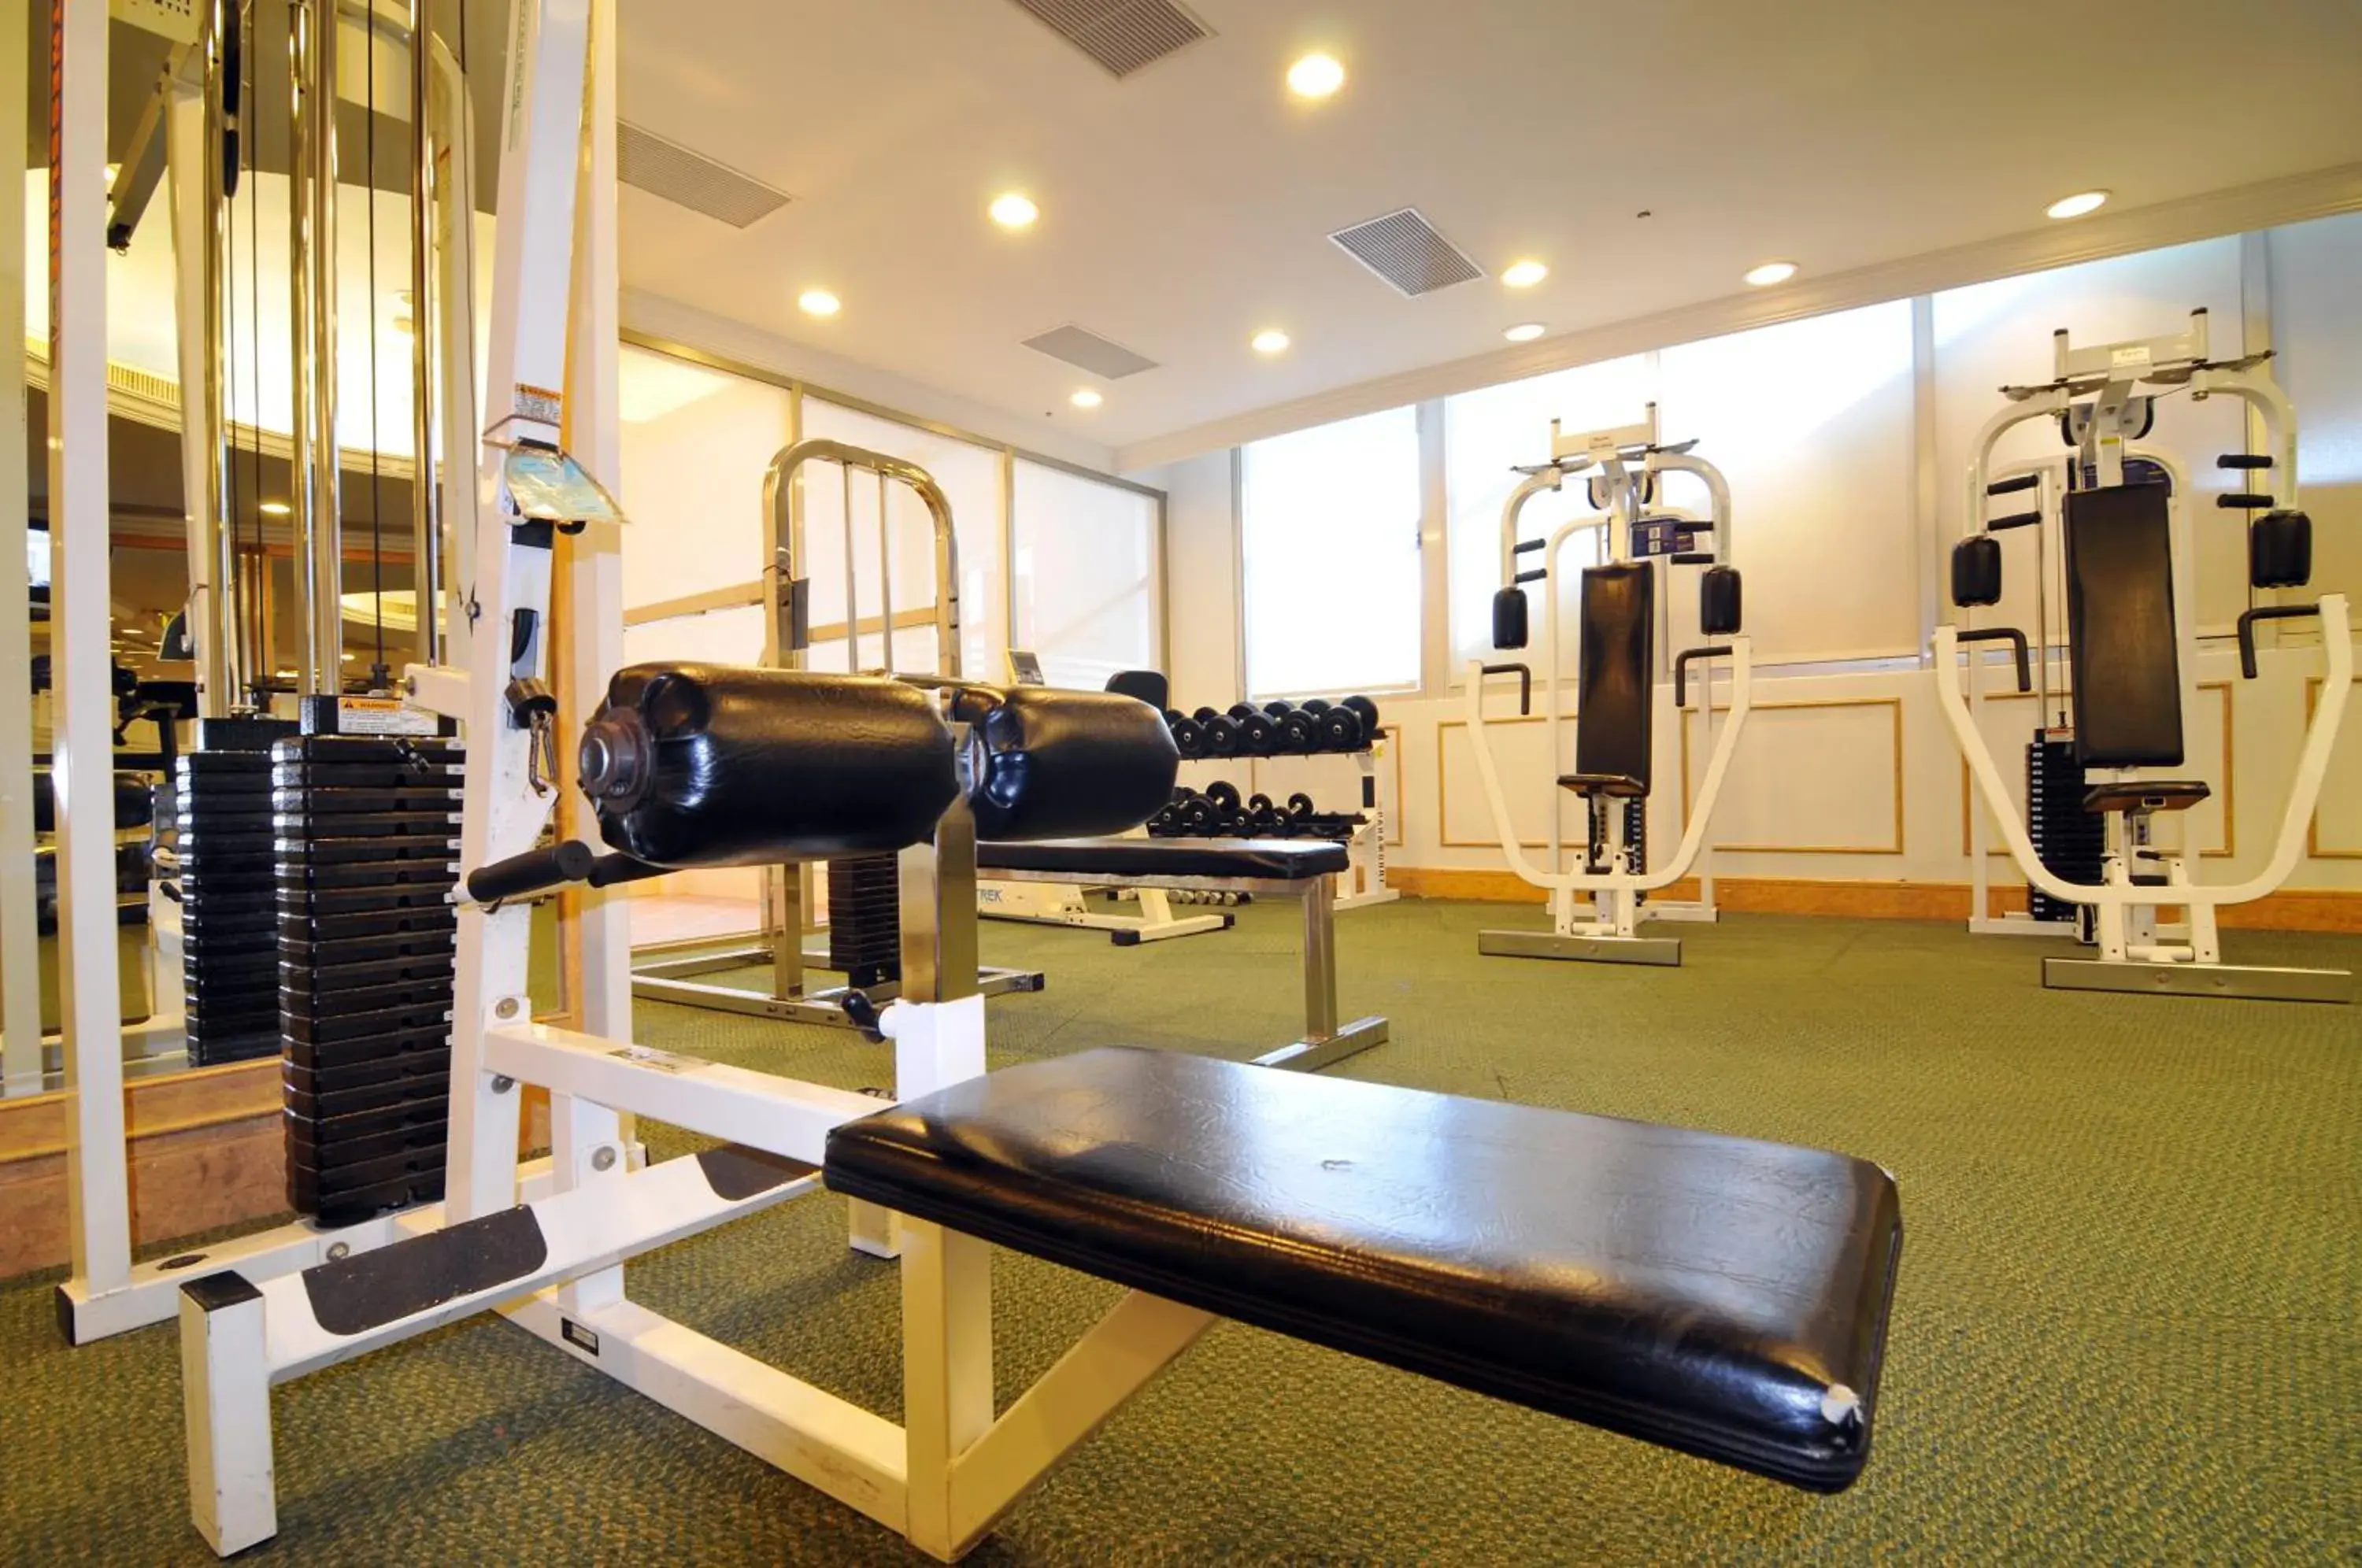 Fitness centre/facilities, Fitness Center/Facilities in Yang Ming Shan Tien Lai Resort & Spa